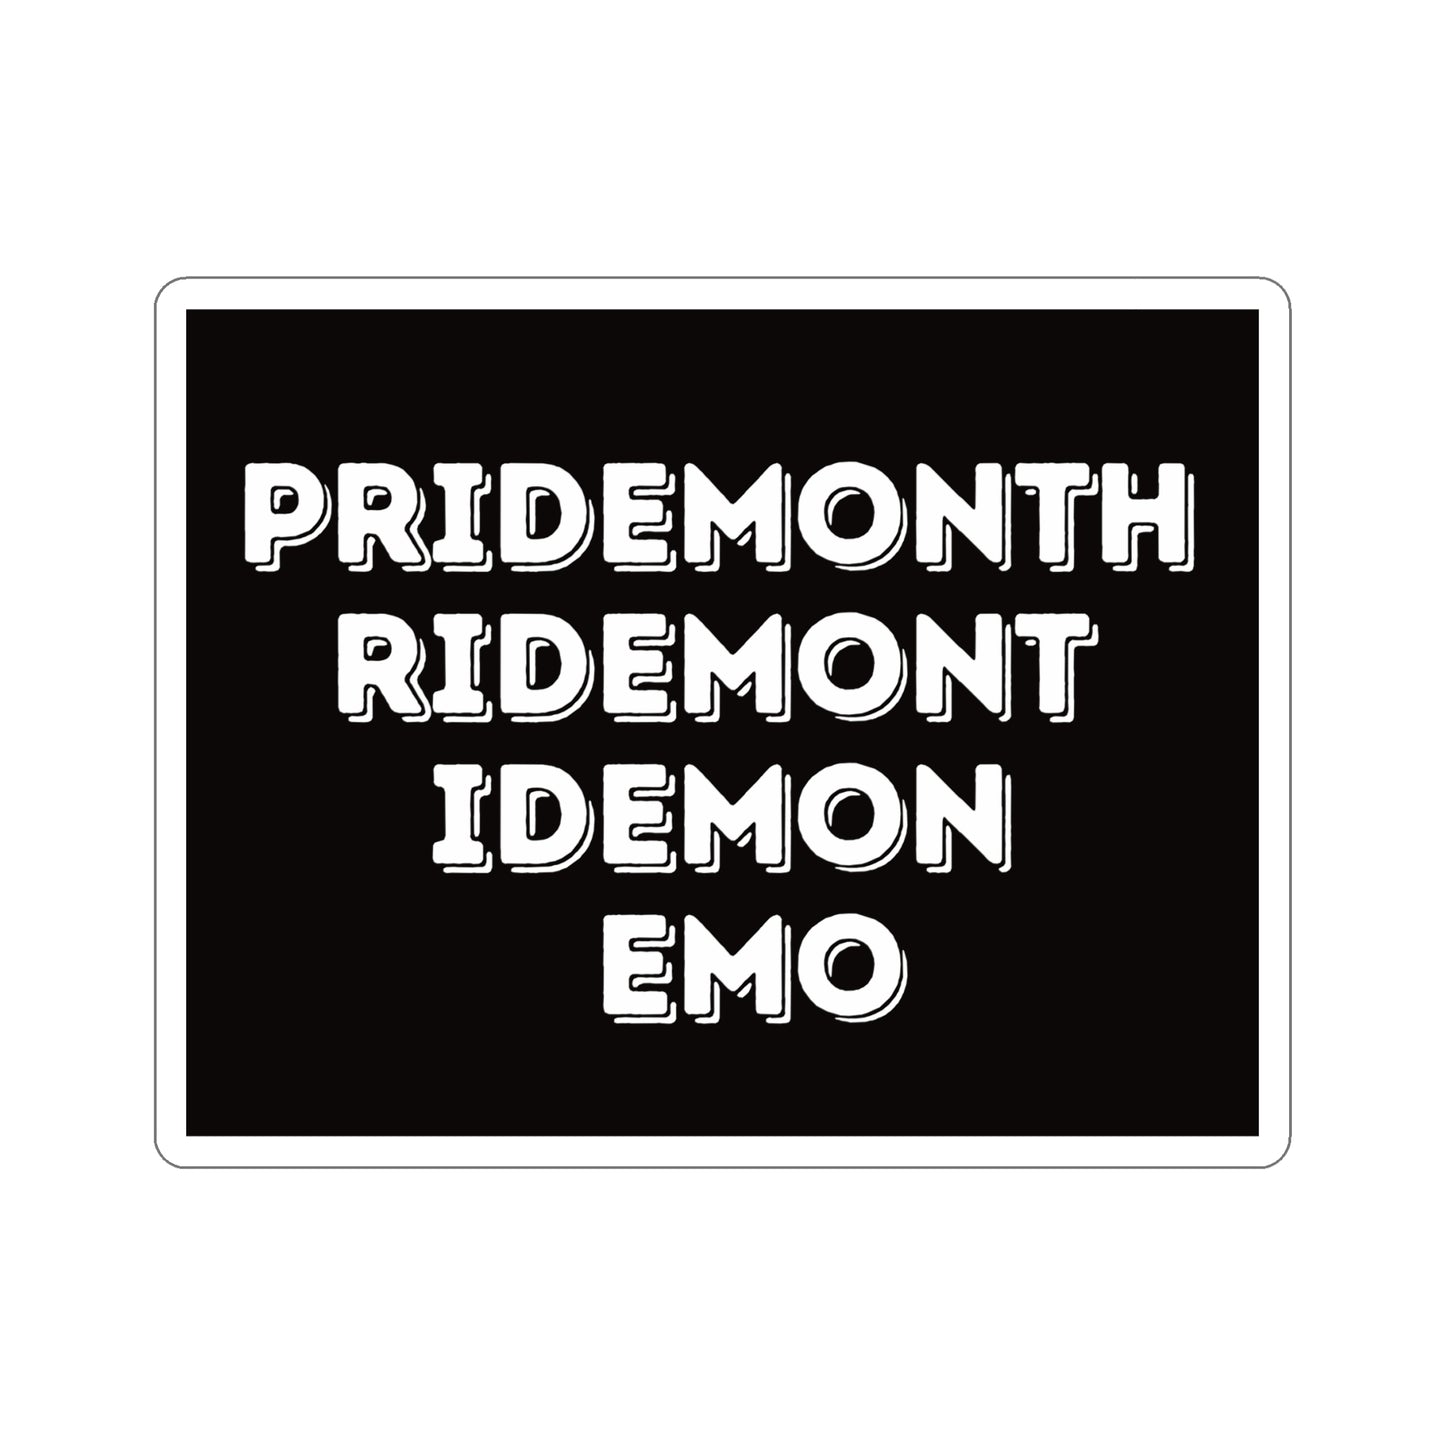 Emo Pride Month Stickers